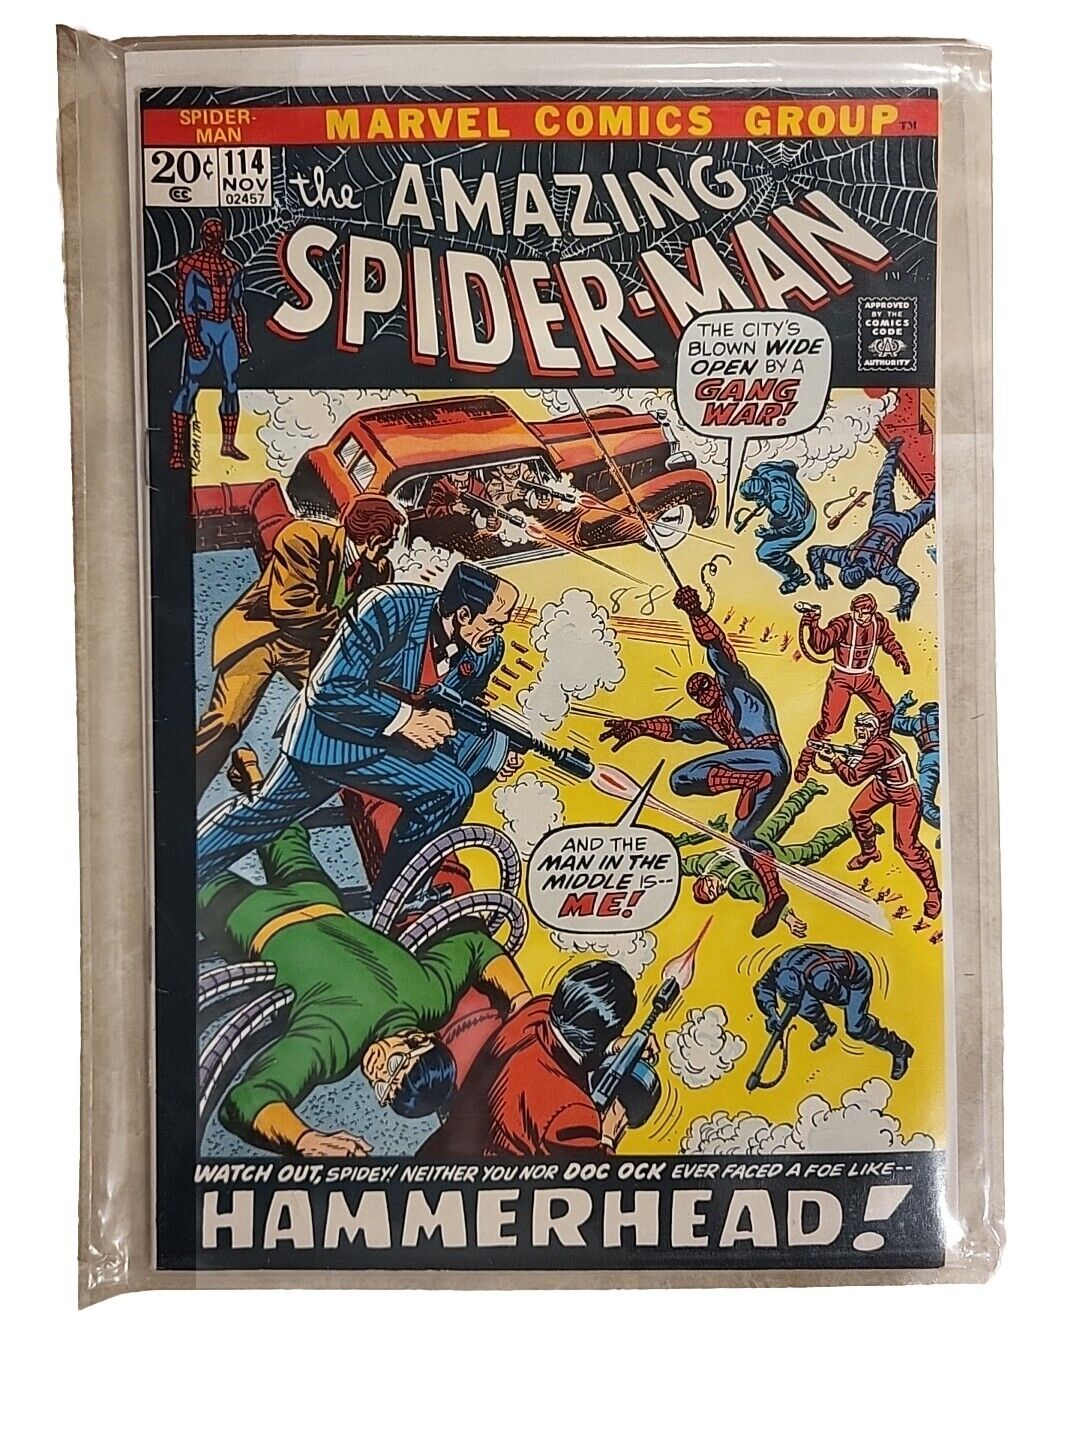 The Amazing Spider-Man #114 (Marvel Comics November 1972)